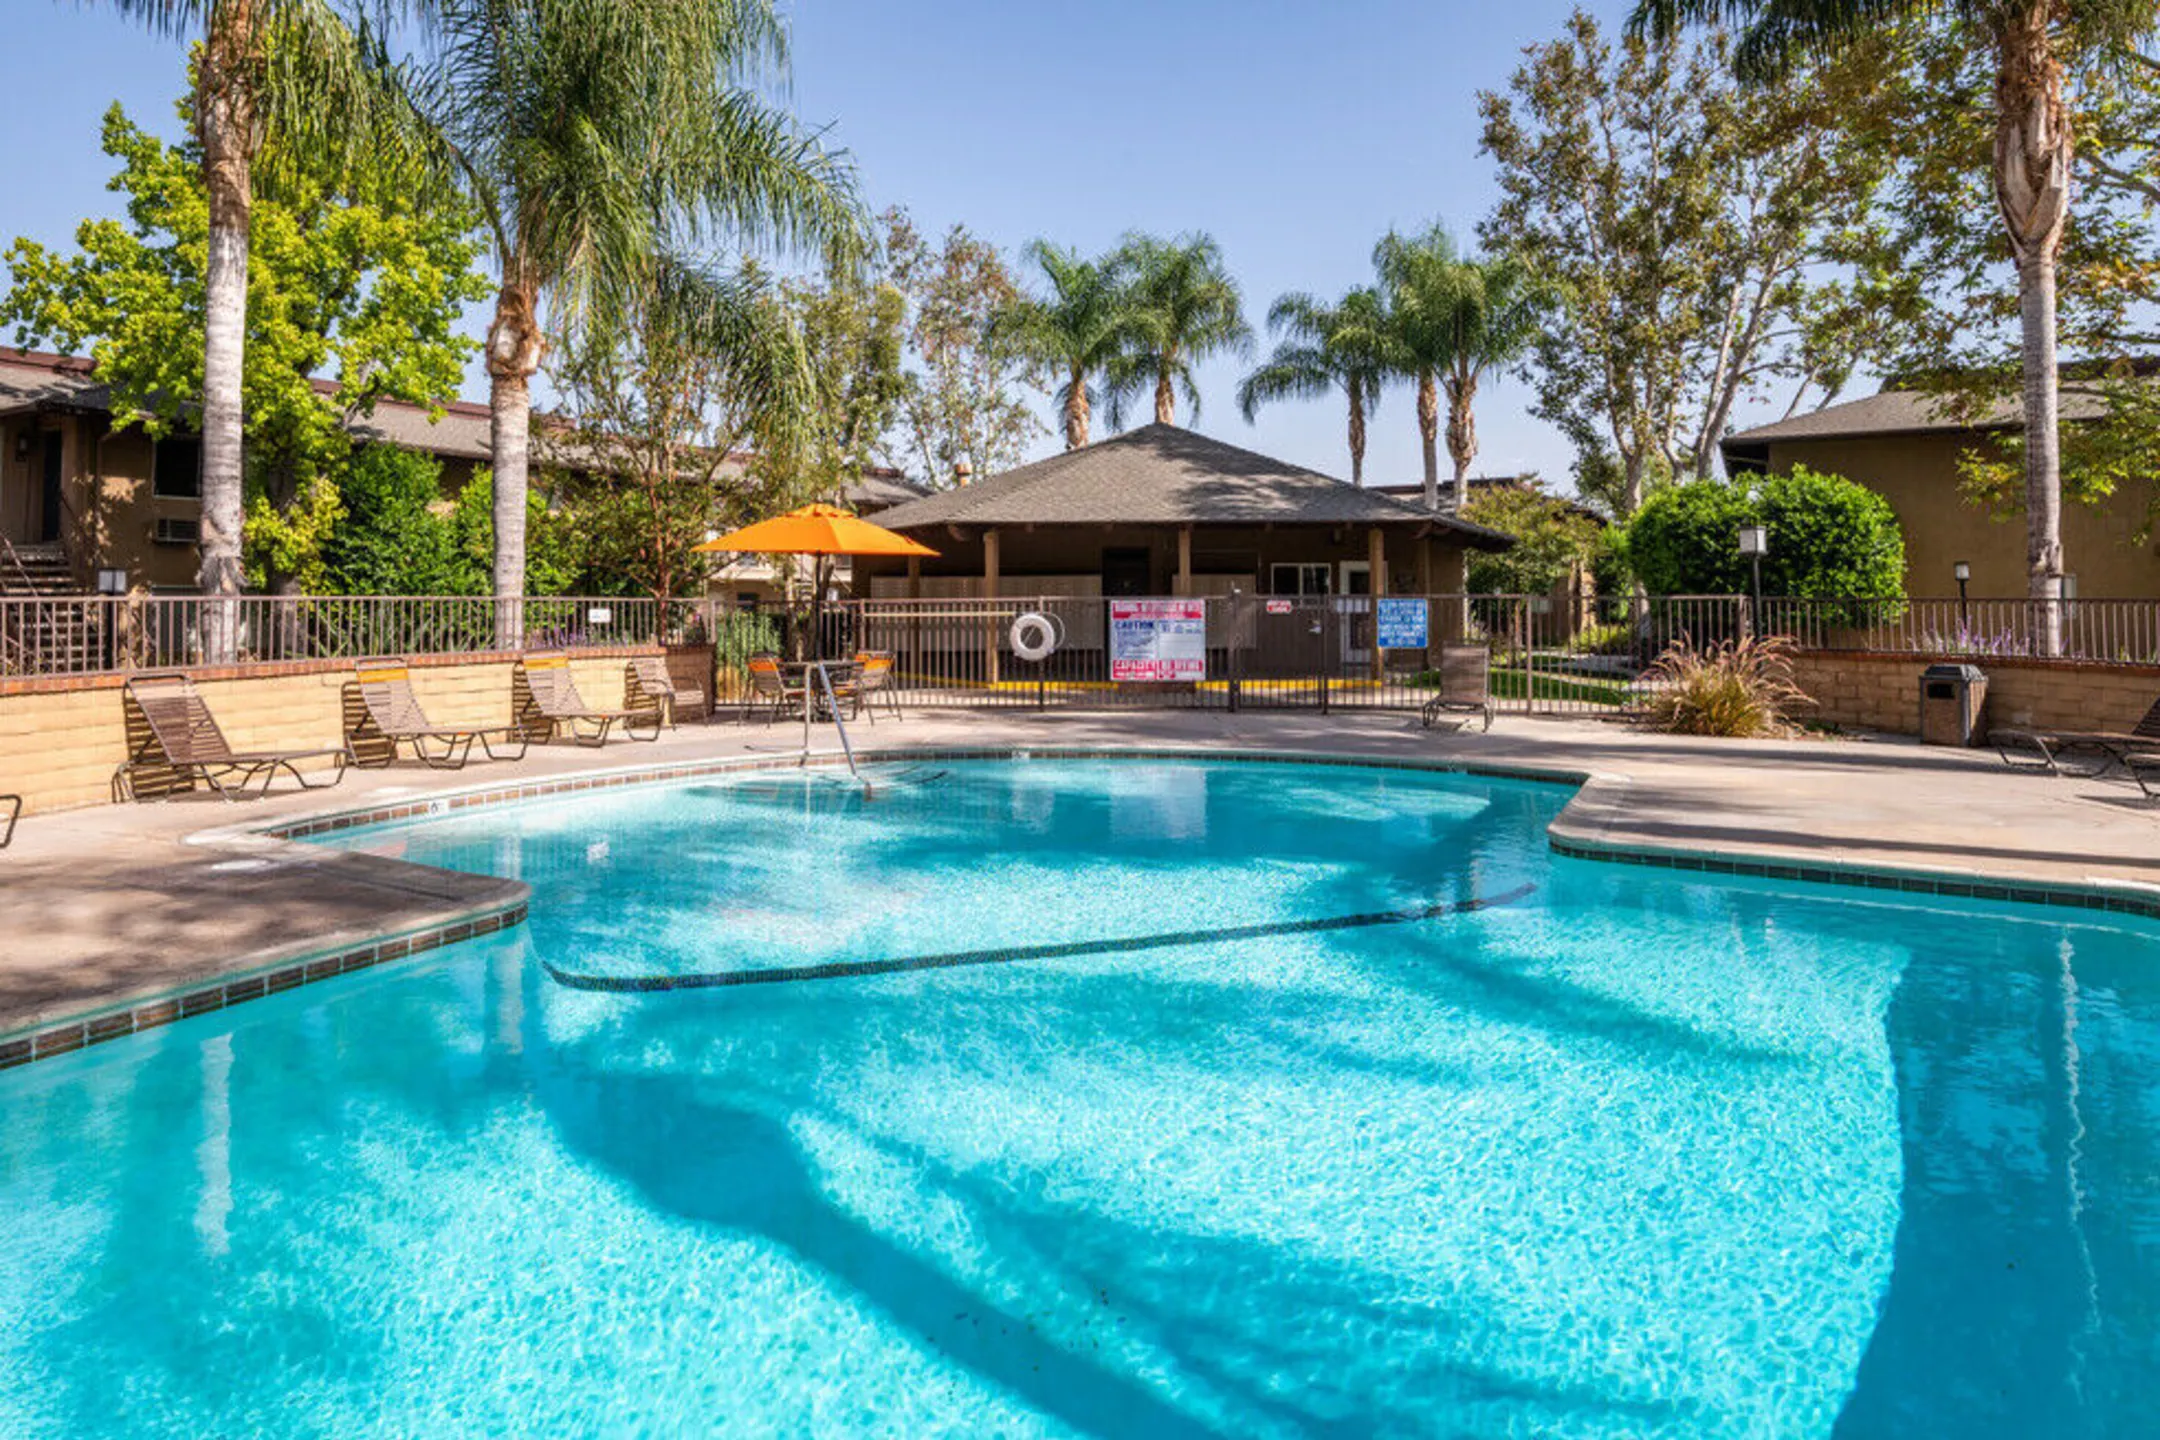 Pool - Casa Sierra Apartment Homes - Riverside, CA